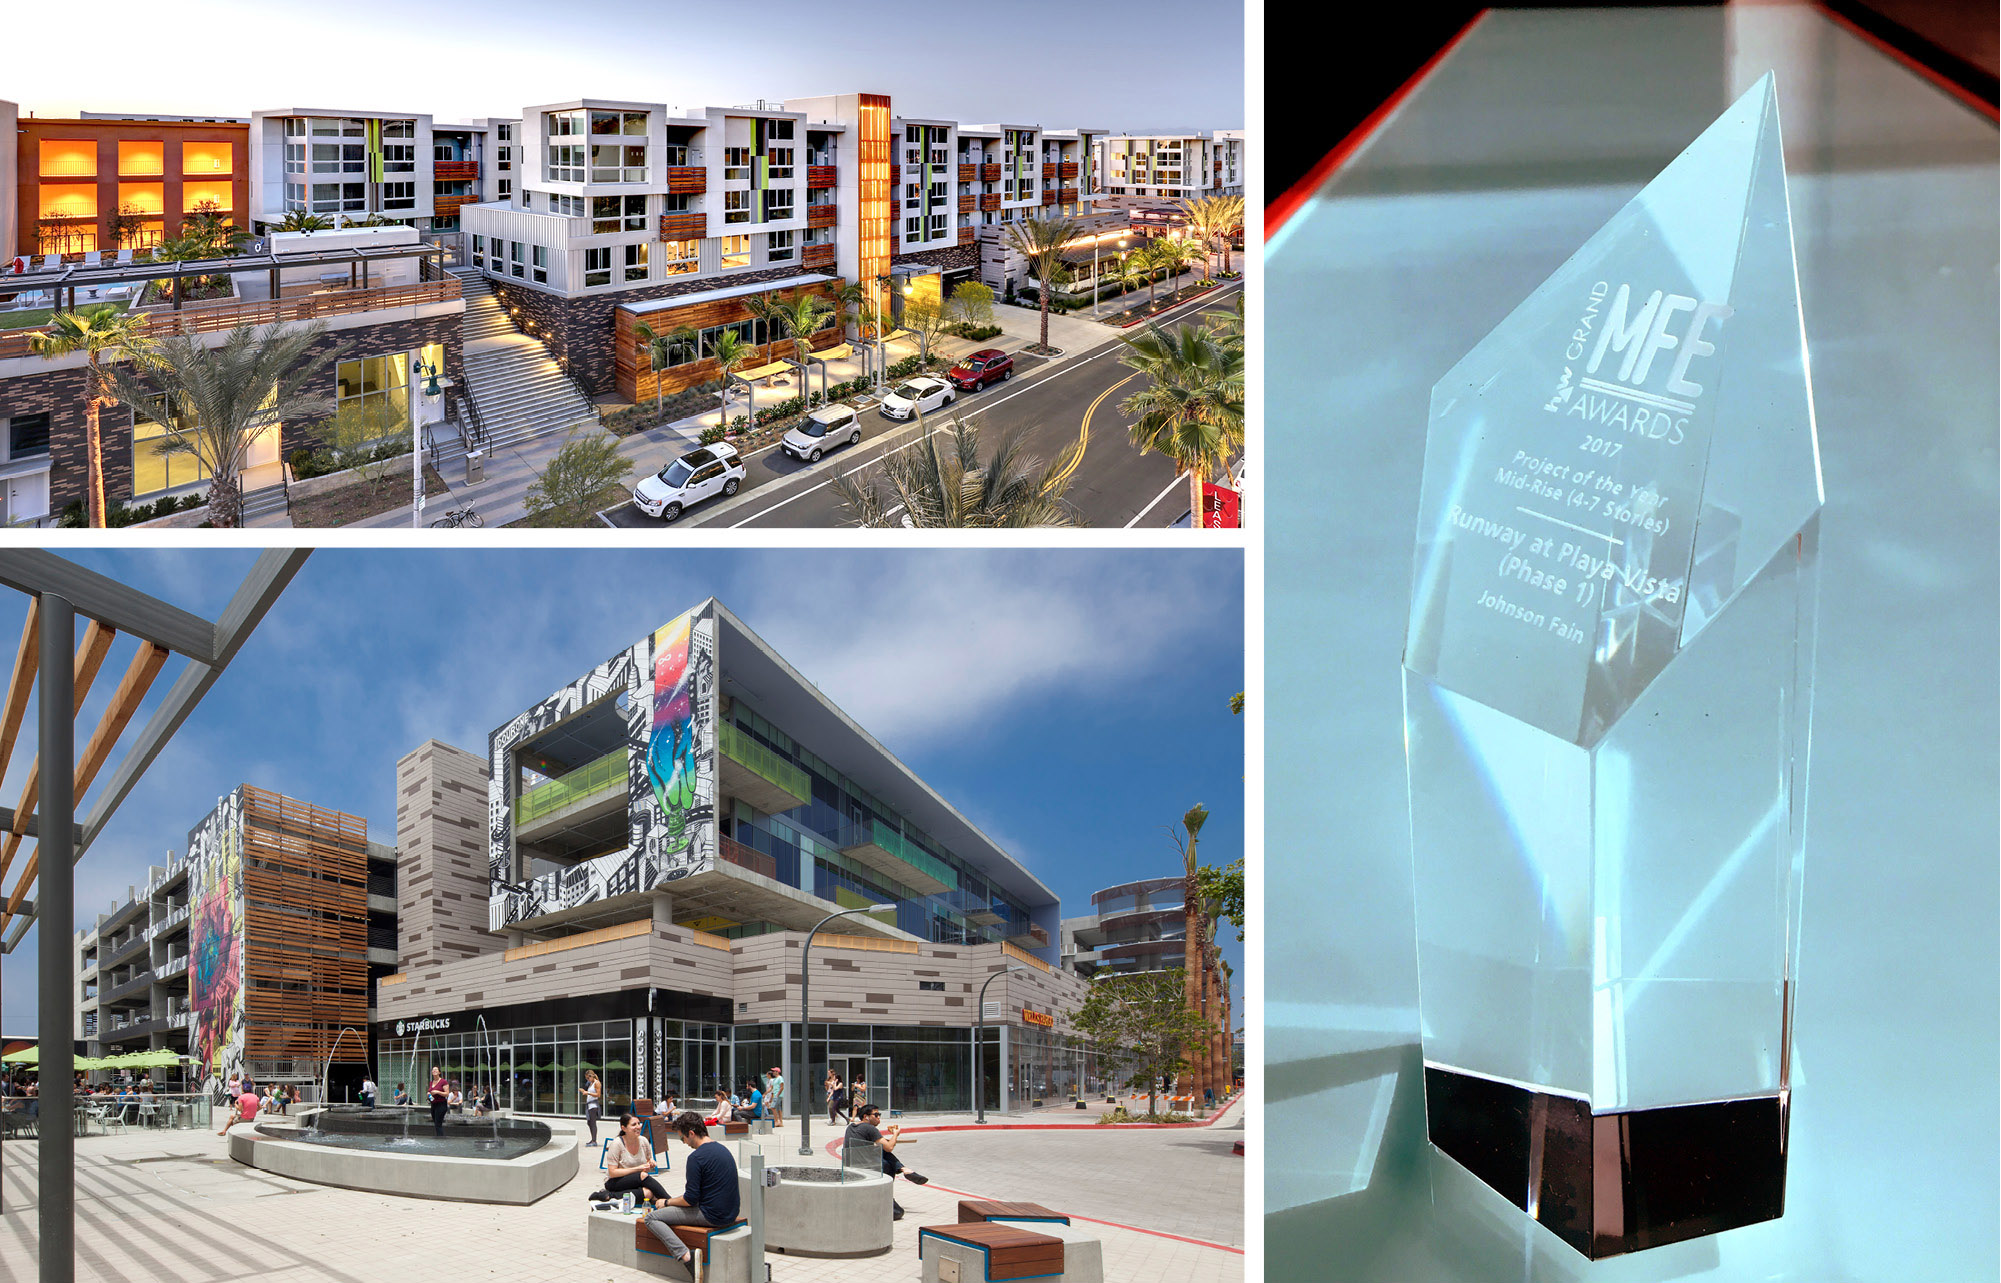 Runway Playa Vista wins Multifamily Executive Project of the Year Award